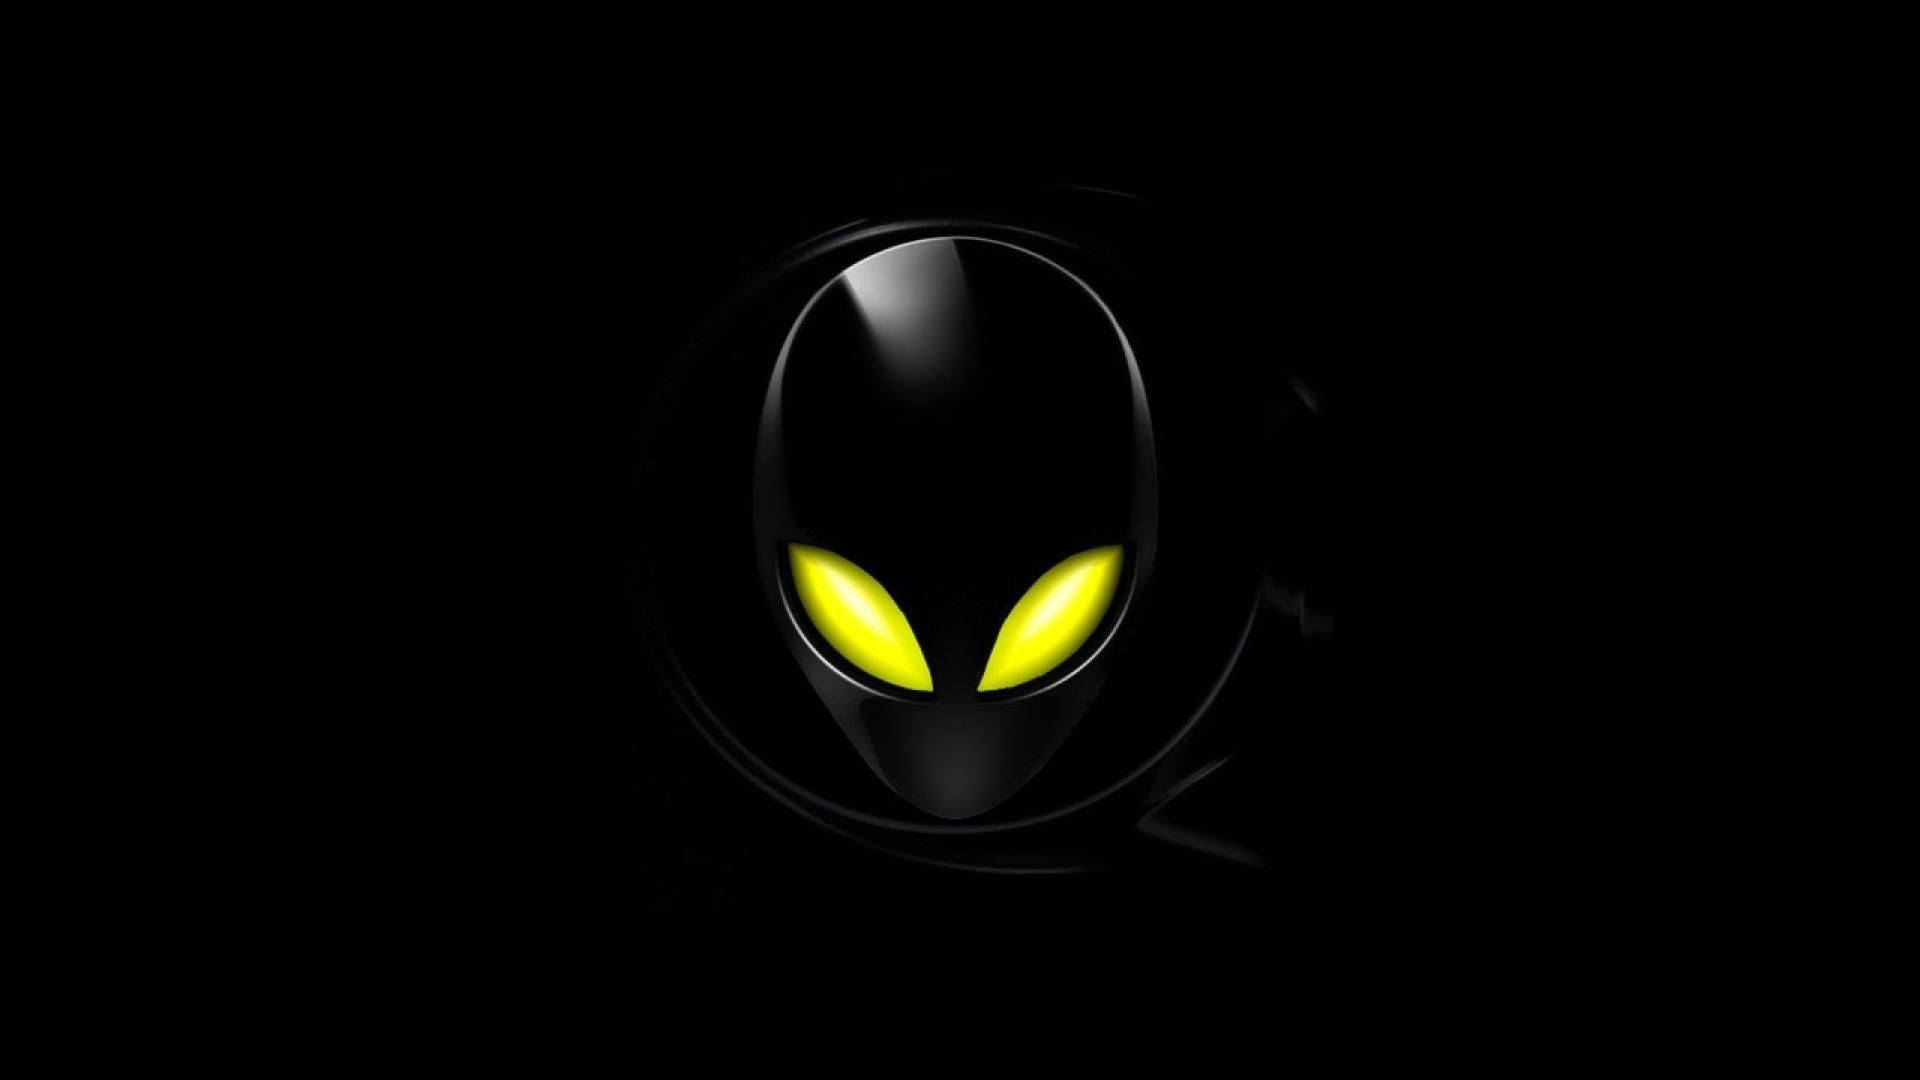 Hd Black Alienware Background